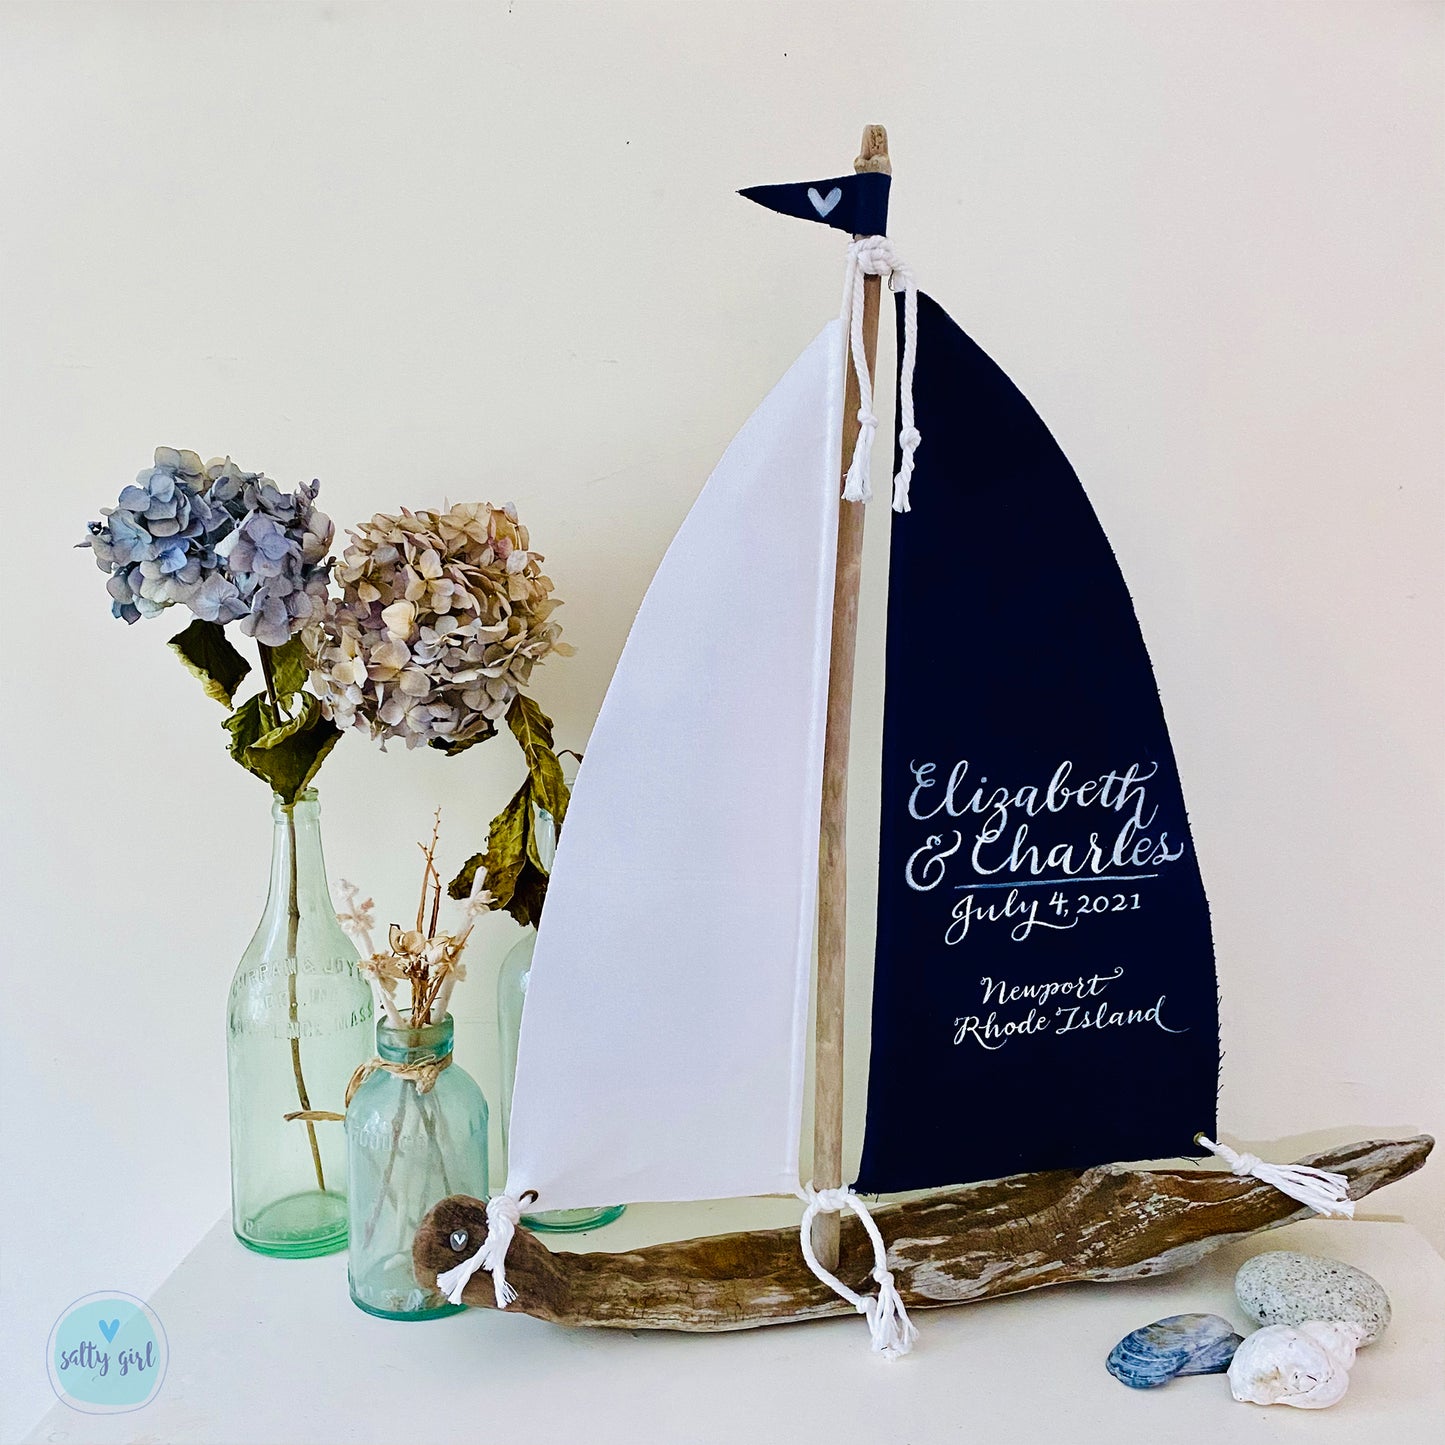 Driftwood Sailboat Centerpiece - Large 24" Wedding Table Sailboat - Custom Bride & Groom Keepsake